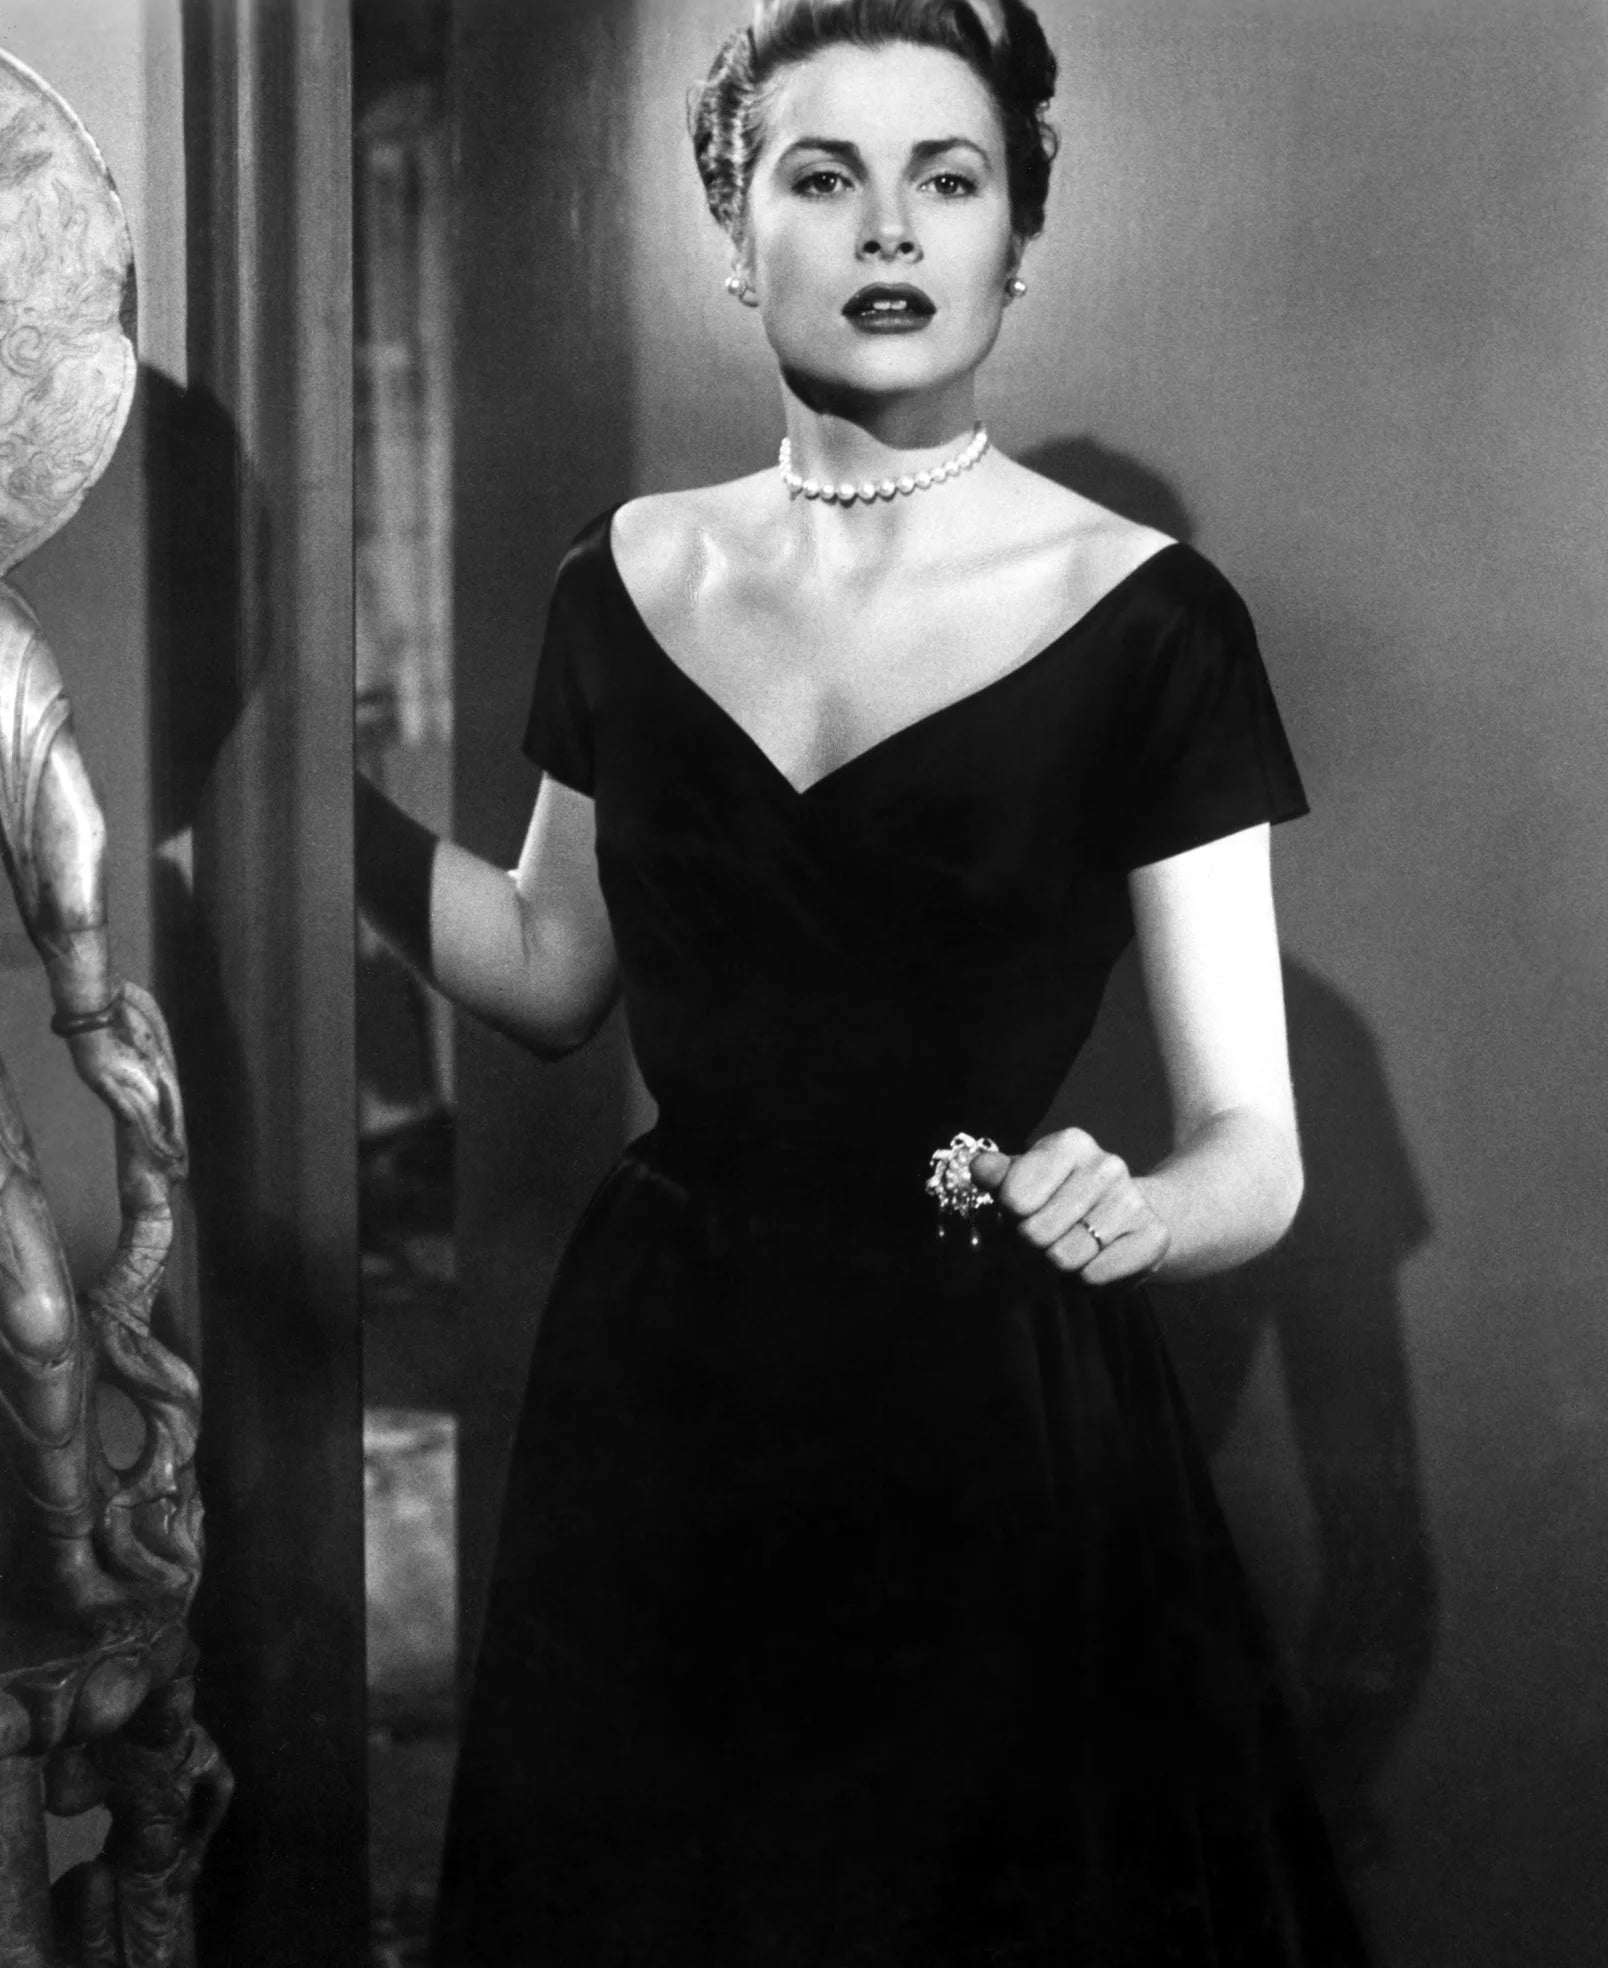 grace kelly 1950s actress fashion style